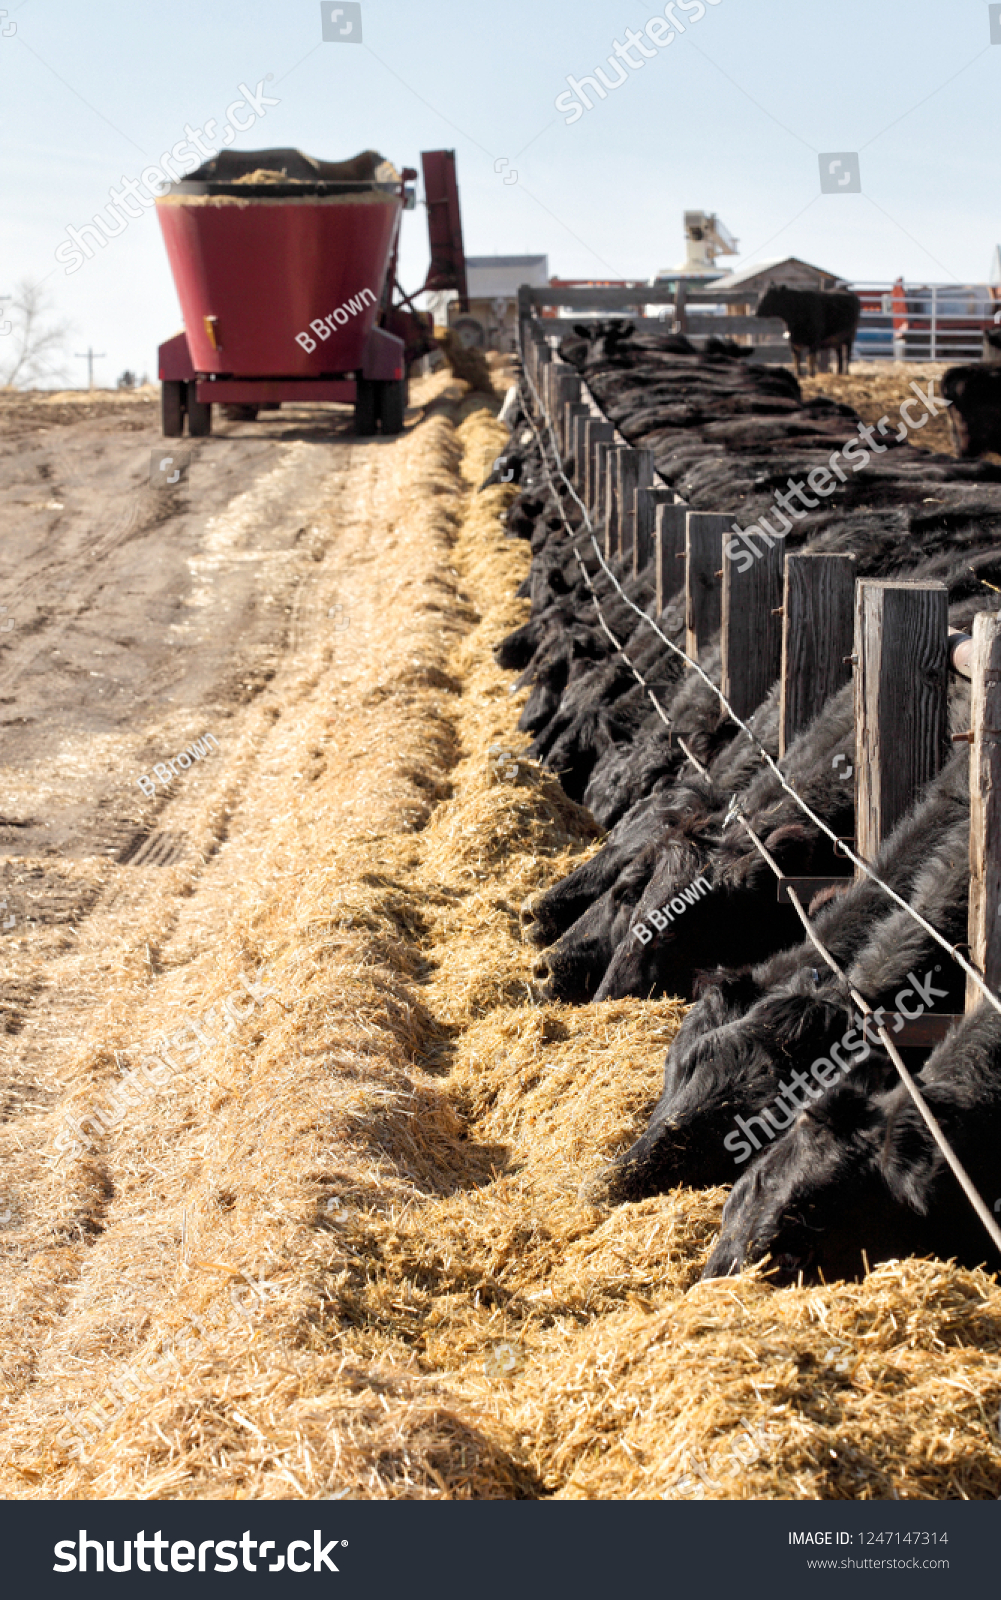 Black angus cows feeding at a feedlot operation #1247147314